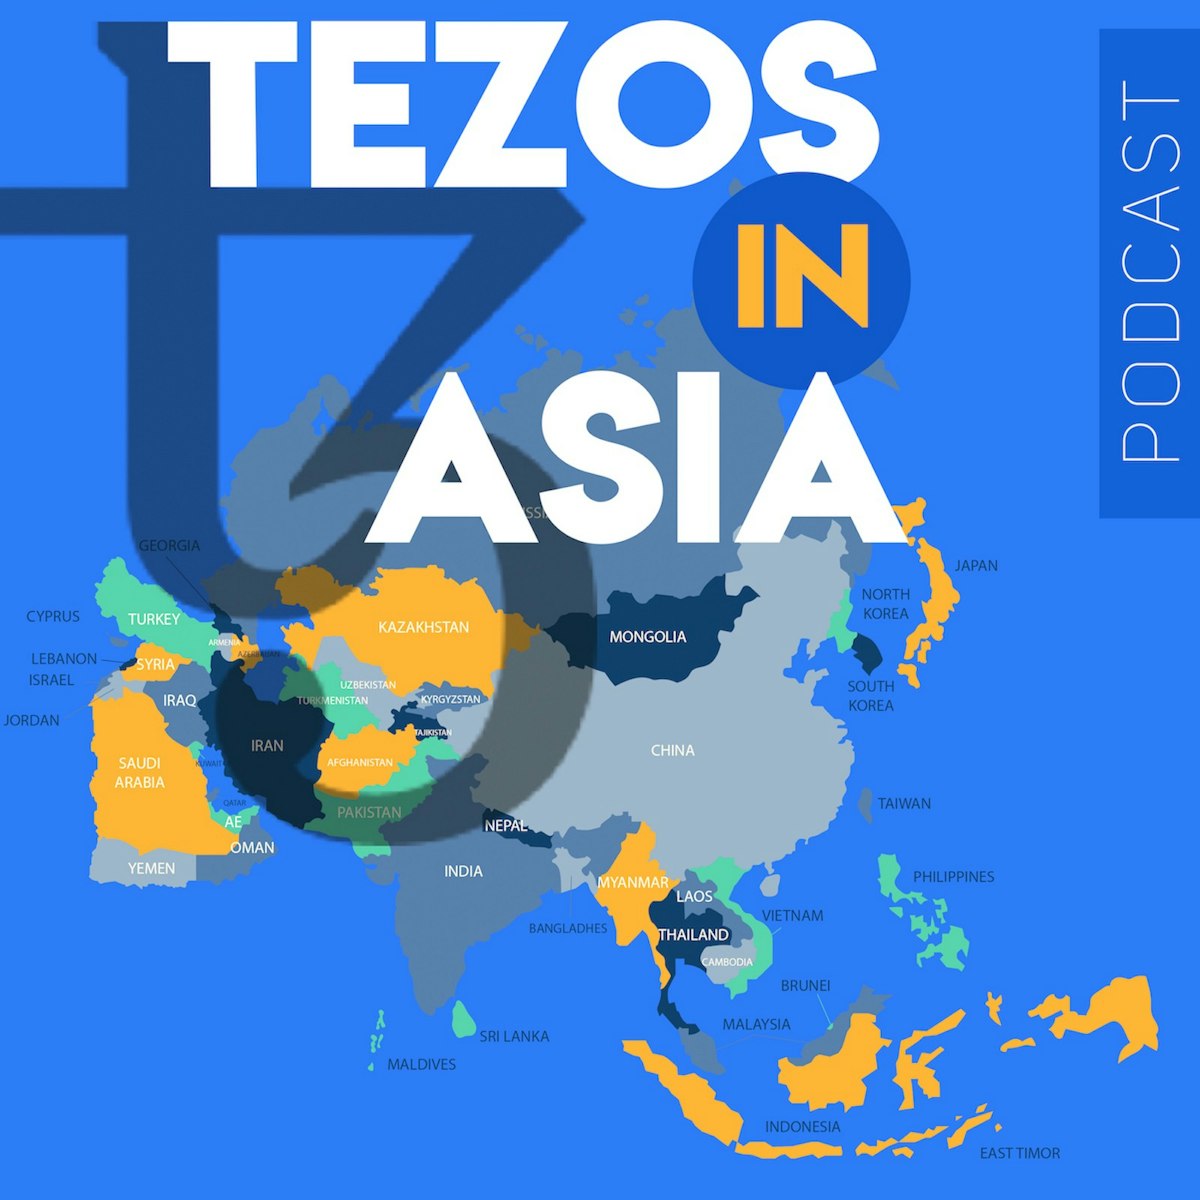 featured image - Tezos Korea Team on How to Build Great Local Developer Communities in Korea